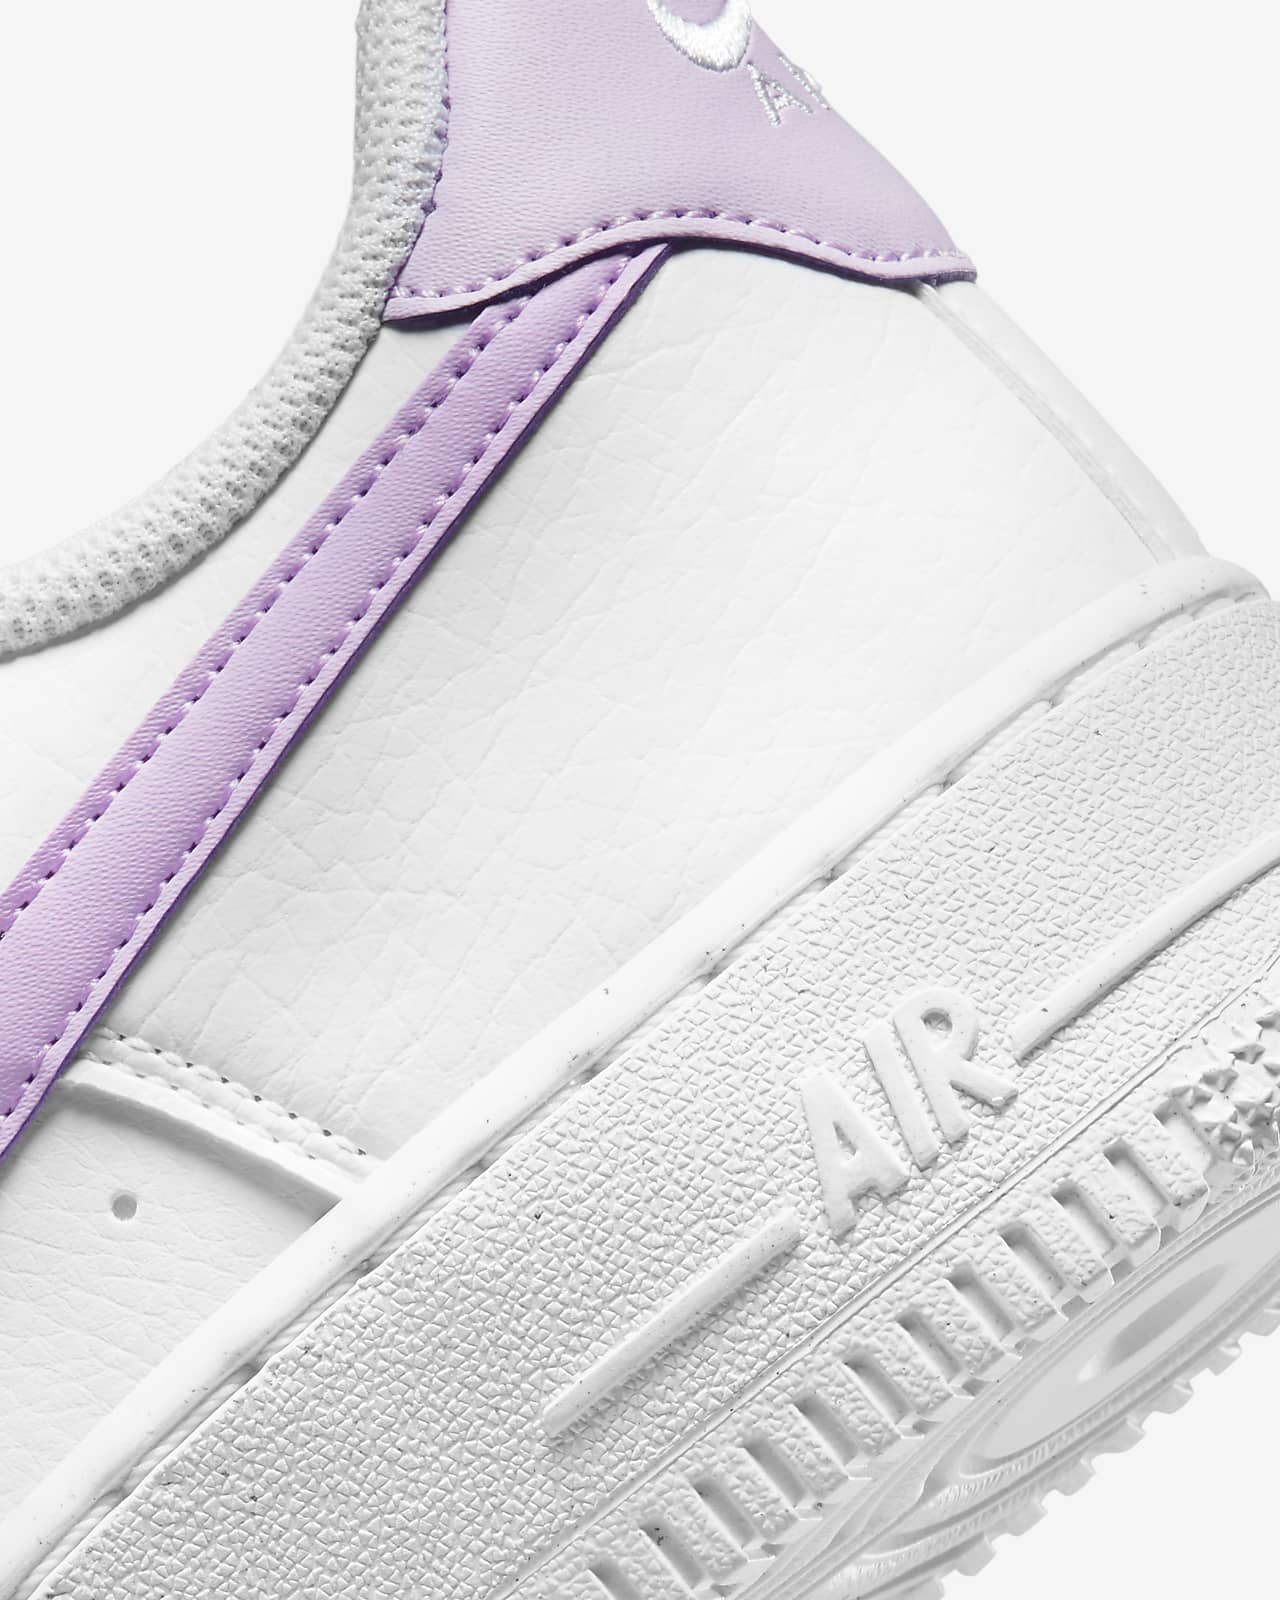 Nike Air Force 1 '07 White/Pastel Purple/Pink